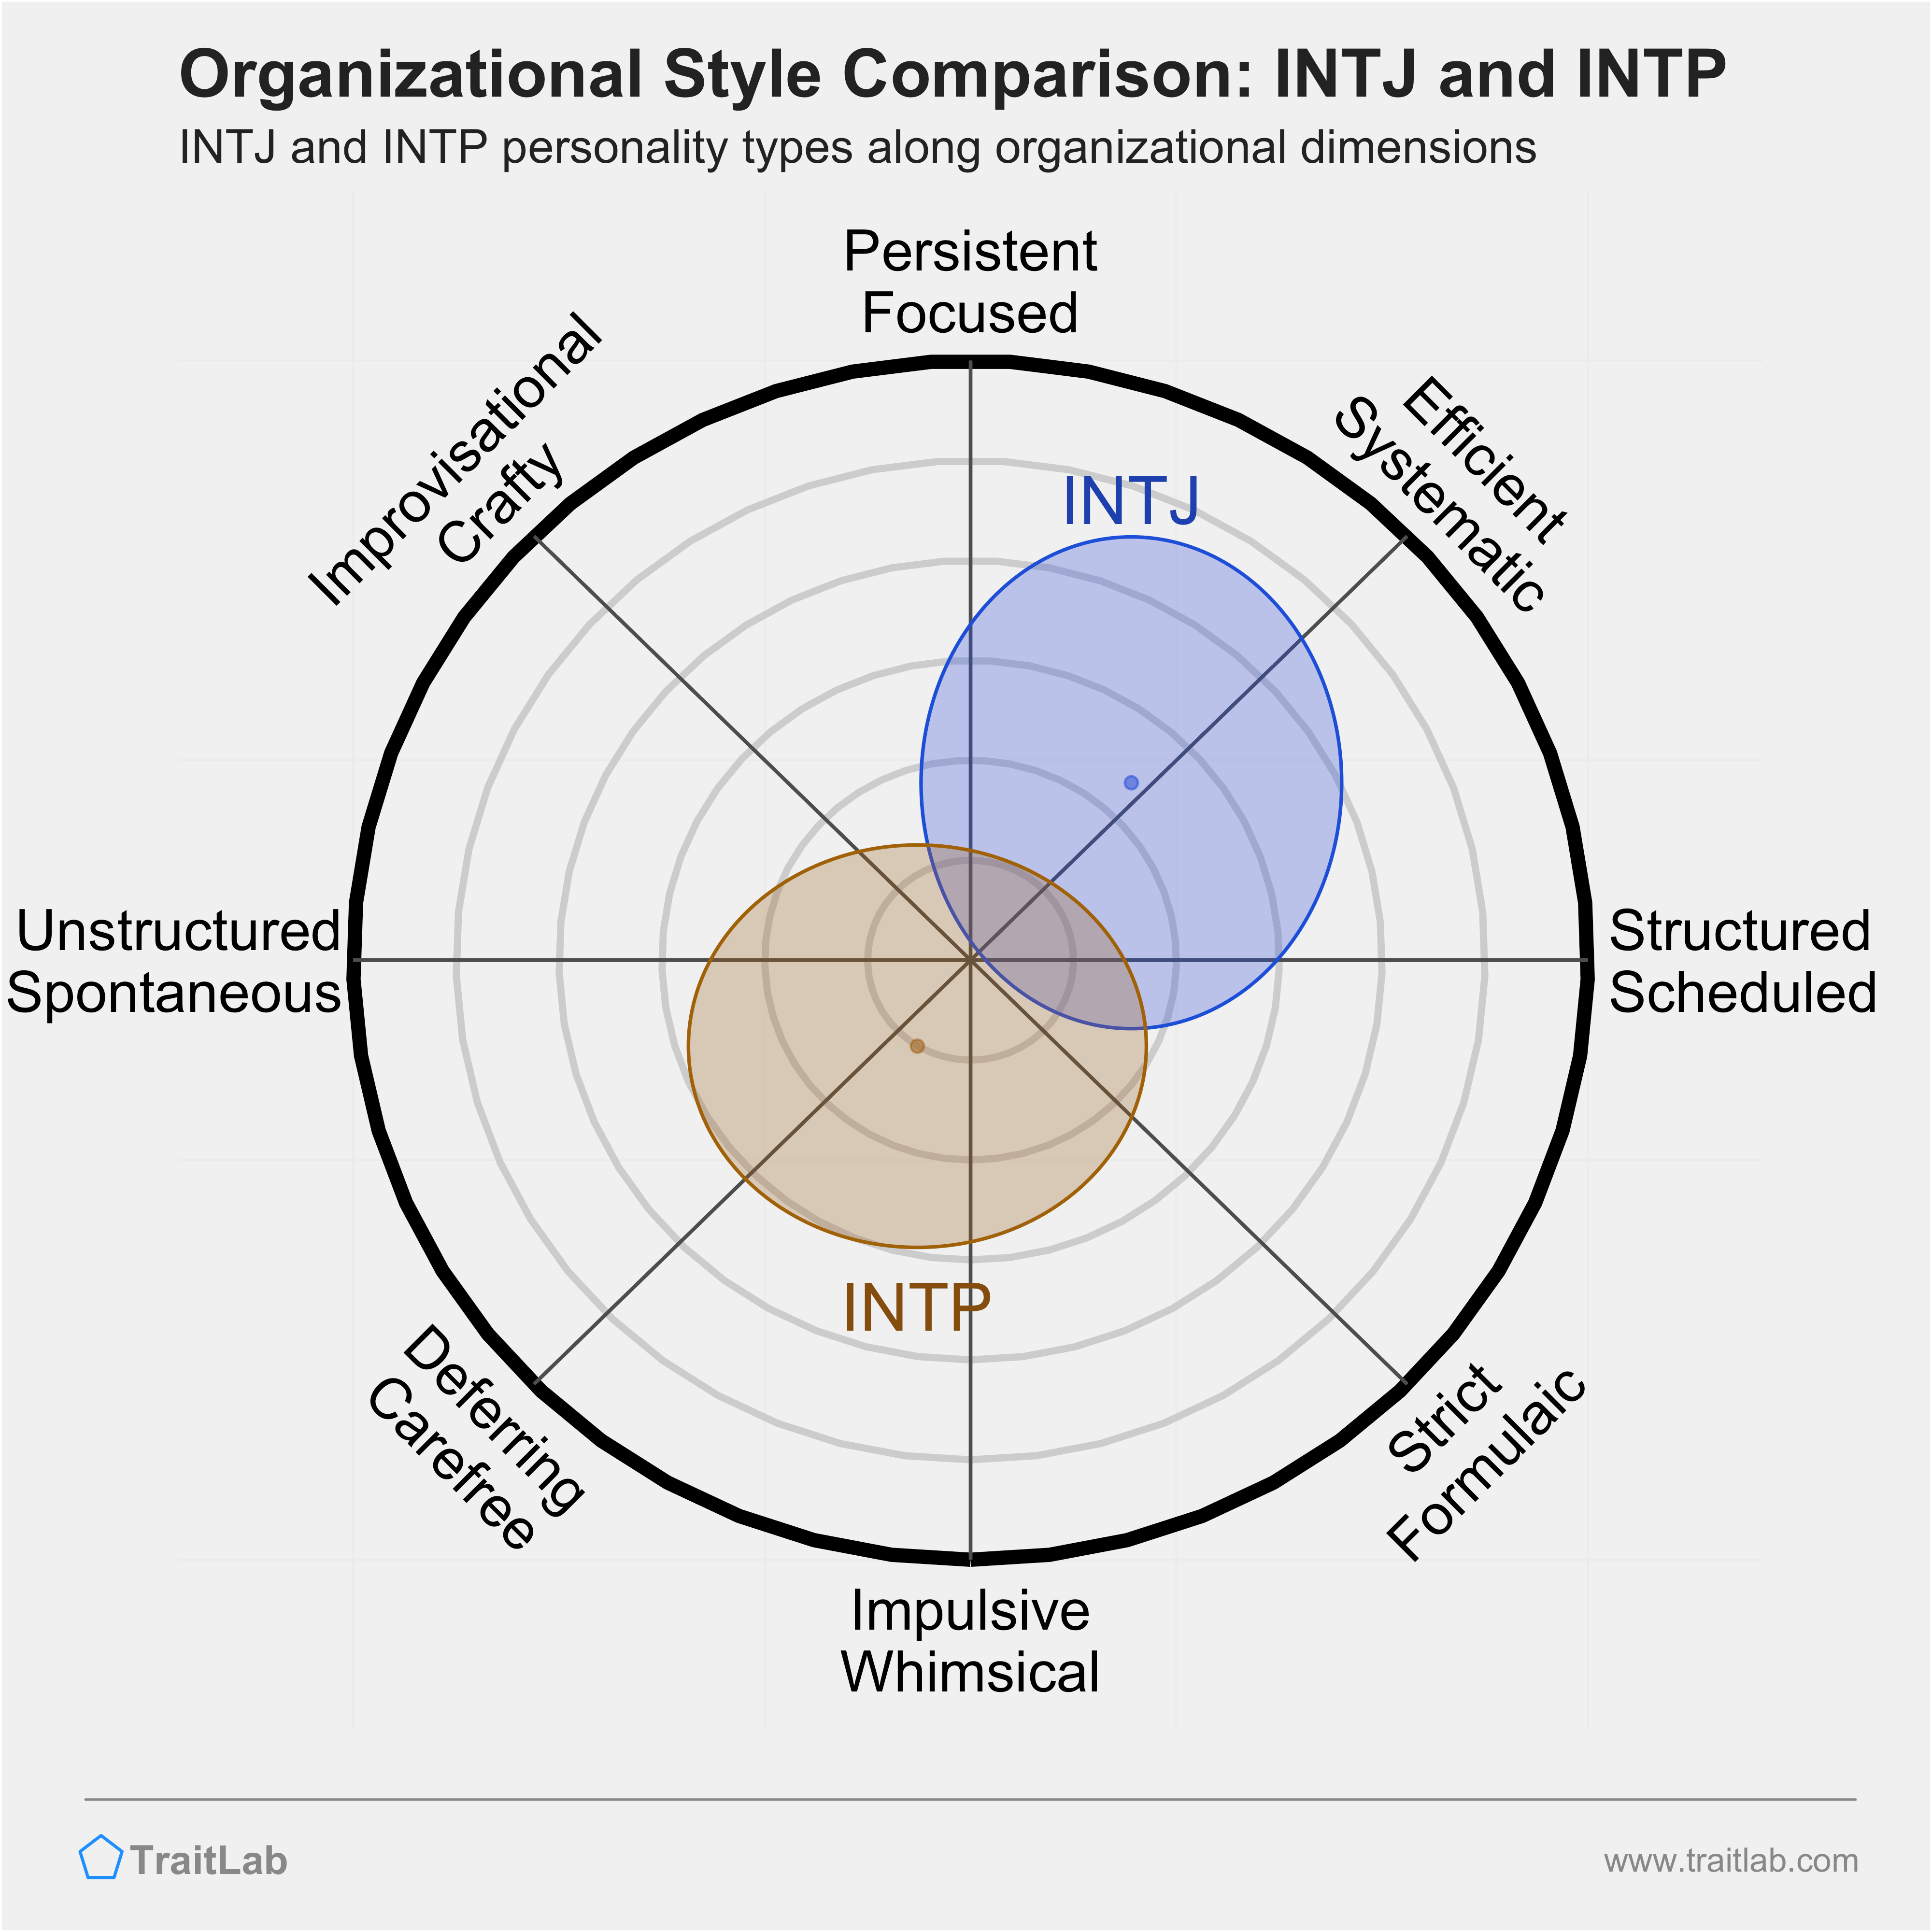 INTJ and INTP comparison across organizational dimensions